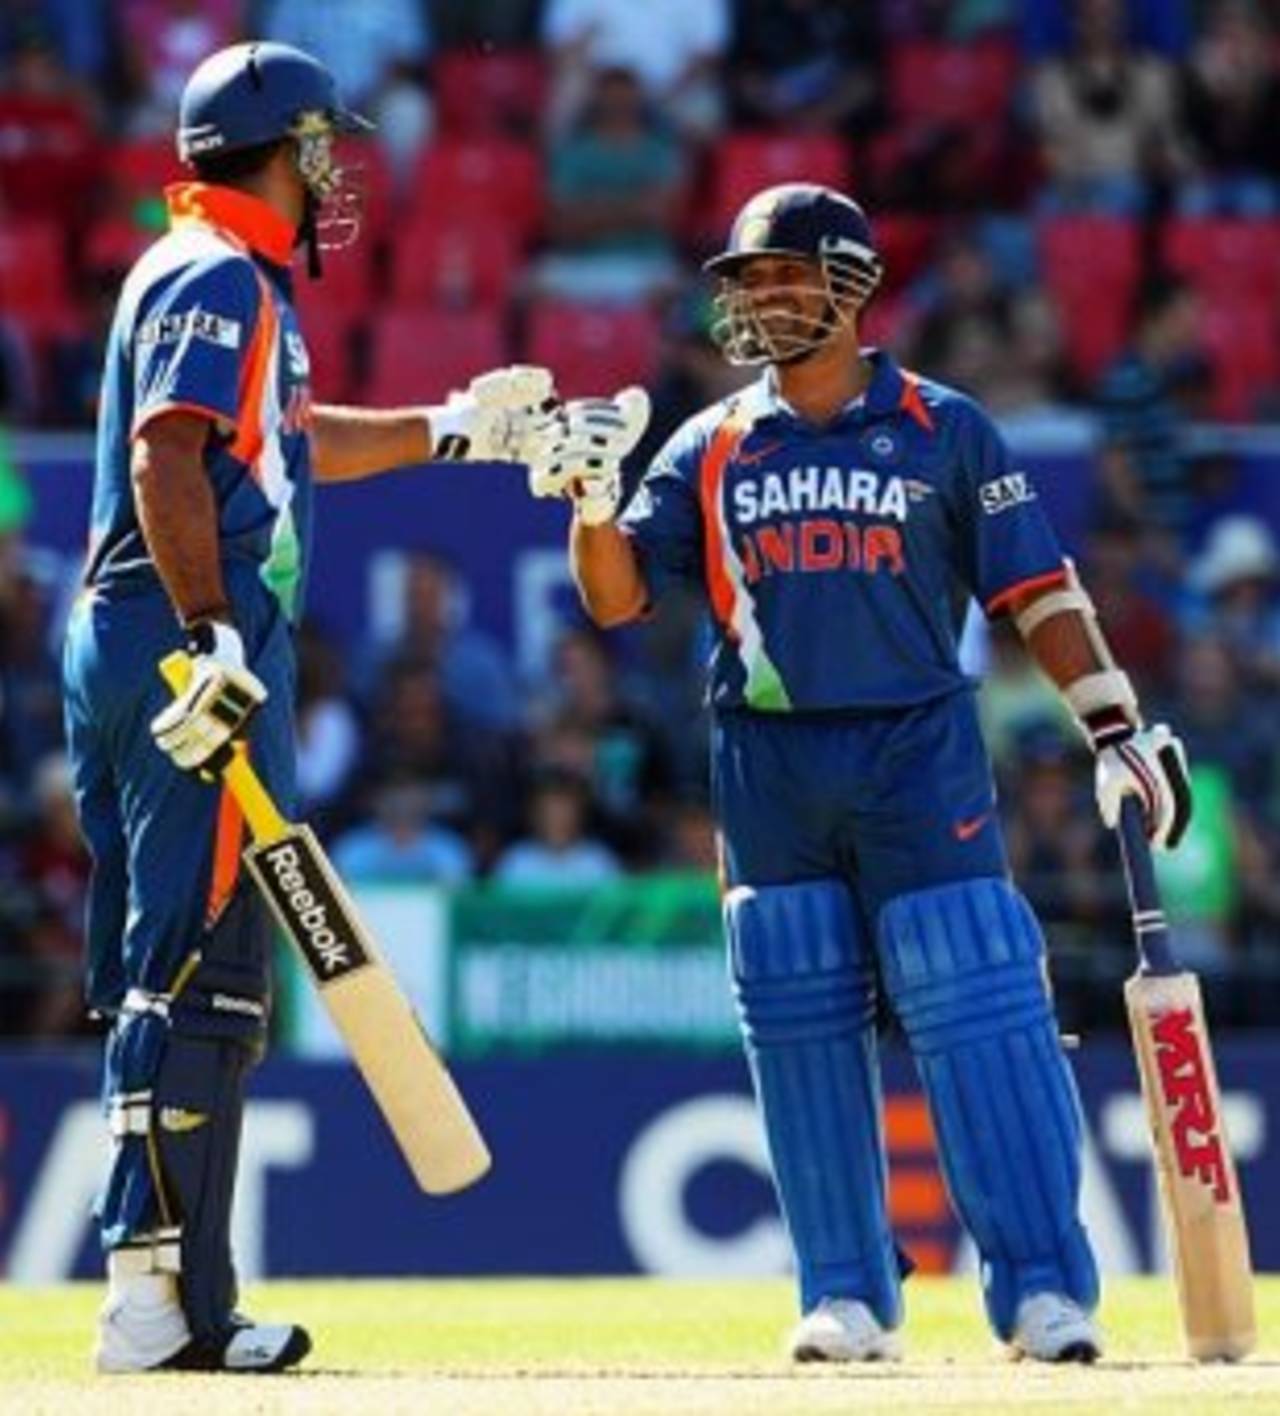 Yuvraj Singh and Sachin Tendulkar scored 69 runs in the batting Powerplay, New Zealand v India, 3rd ODI, Christchurch, March 8, 2009